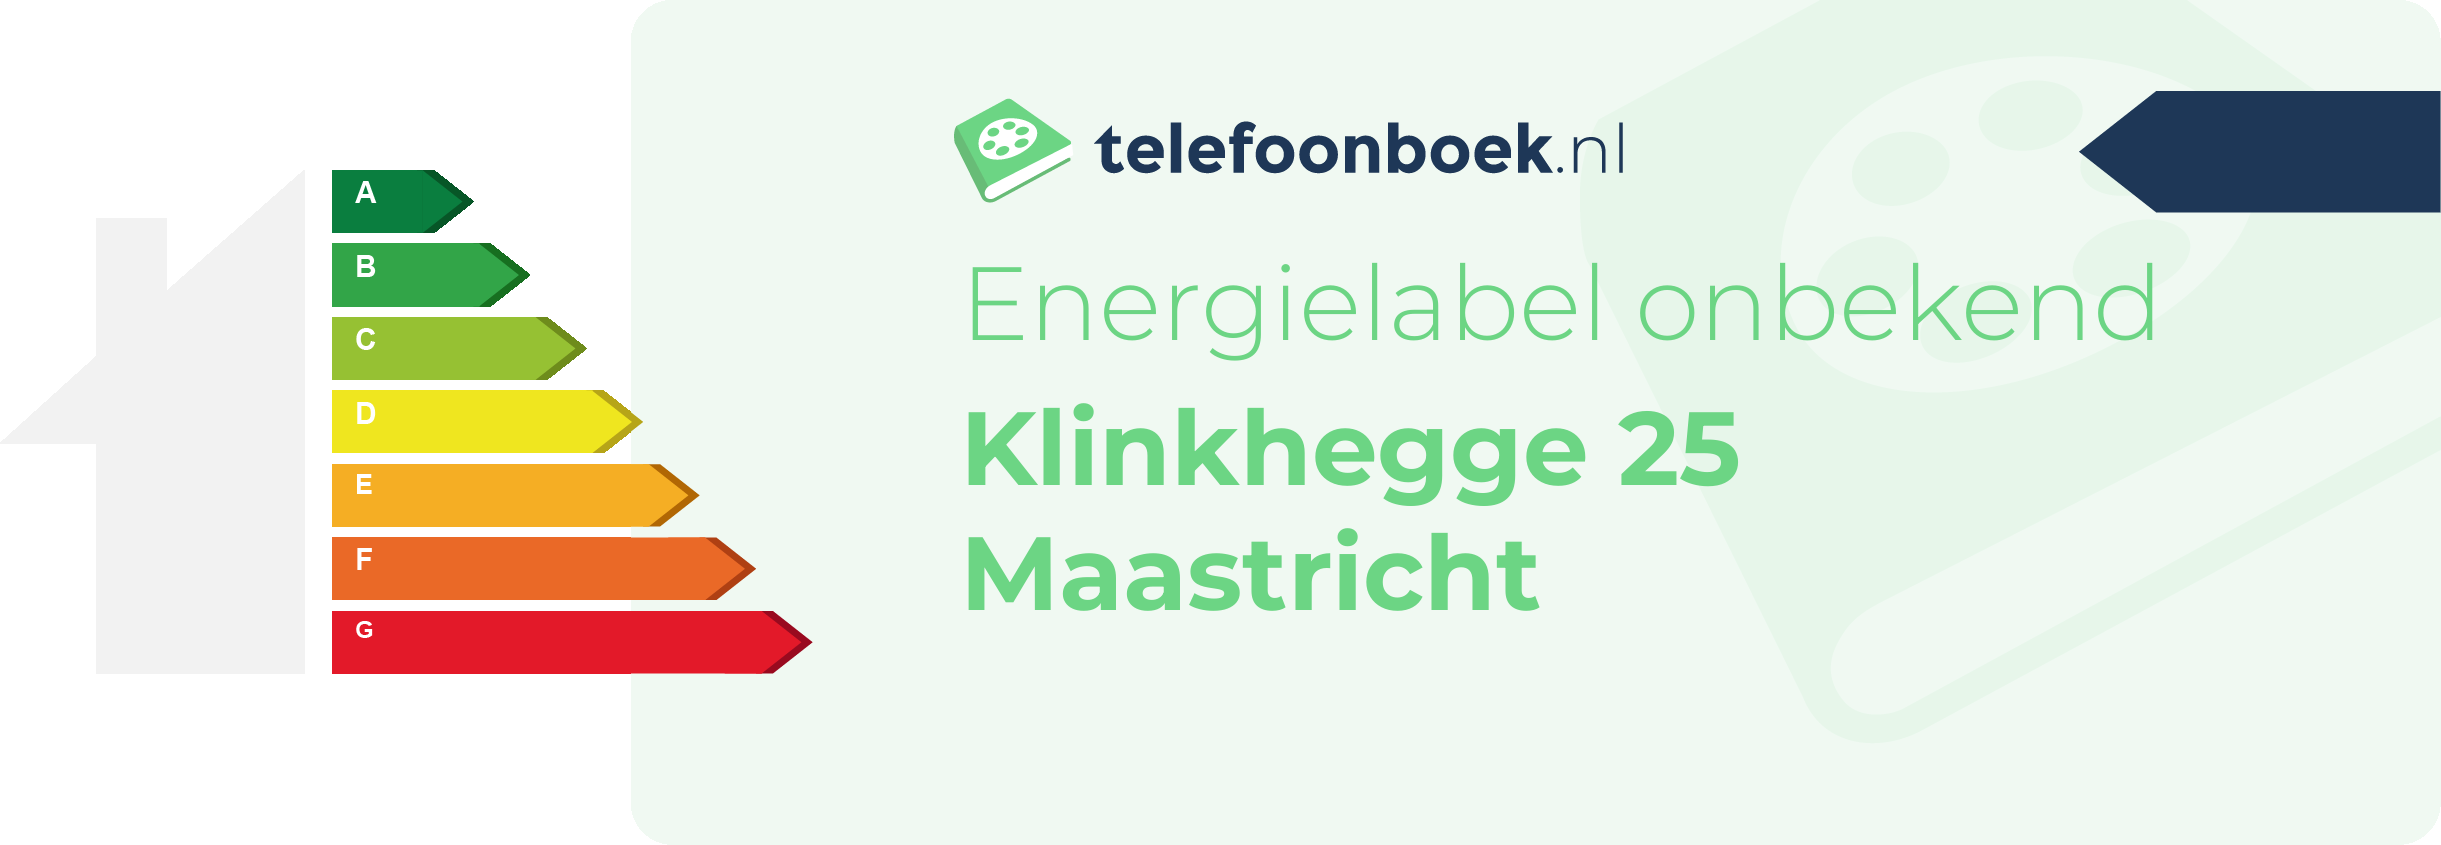 Energielabel Klinkhegge 25 Maastricht